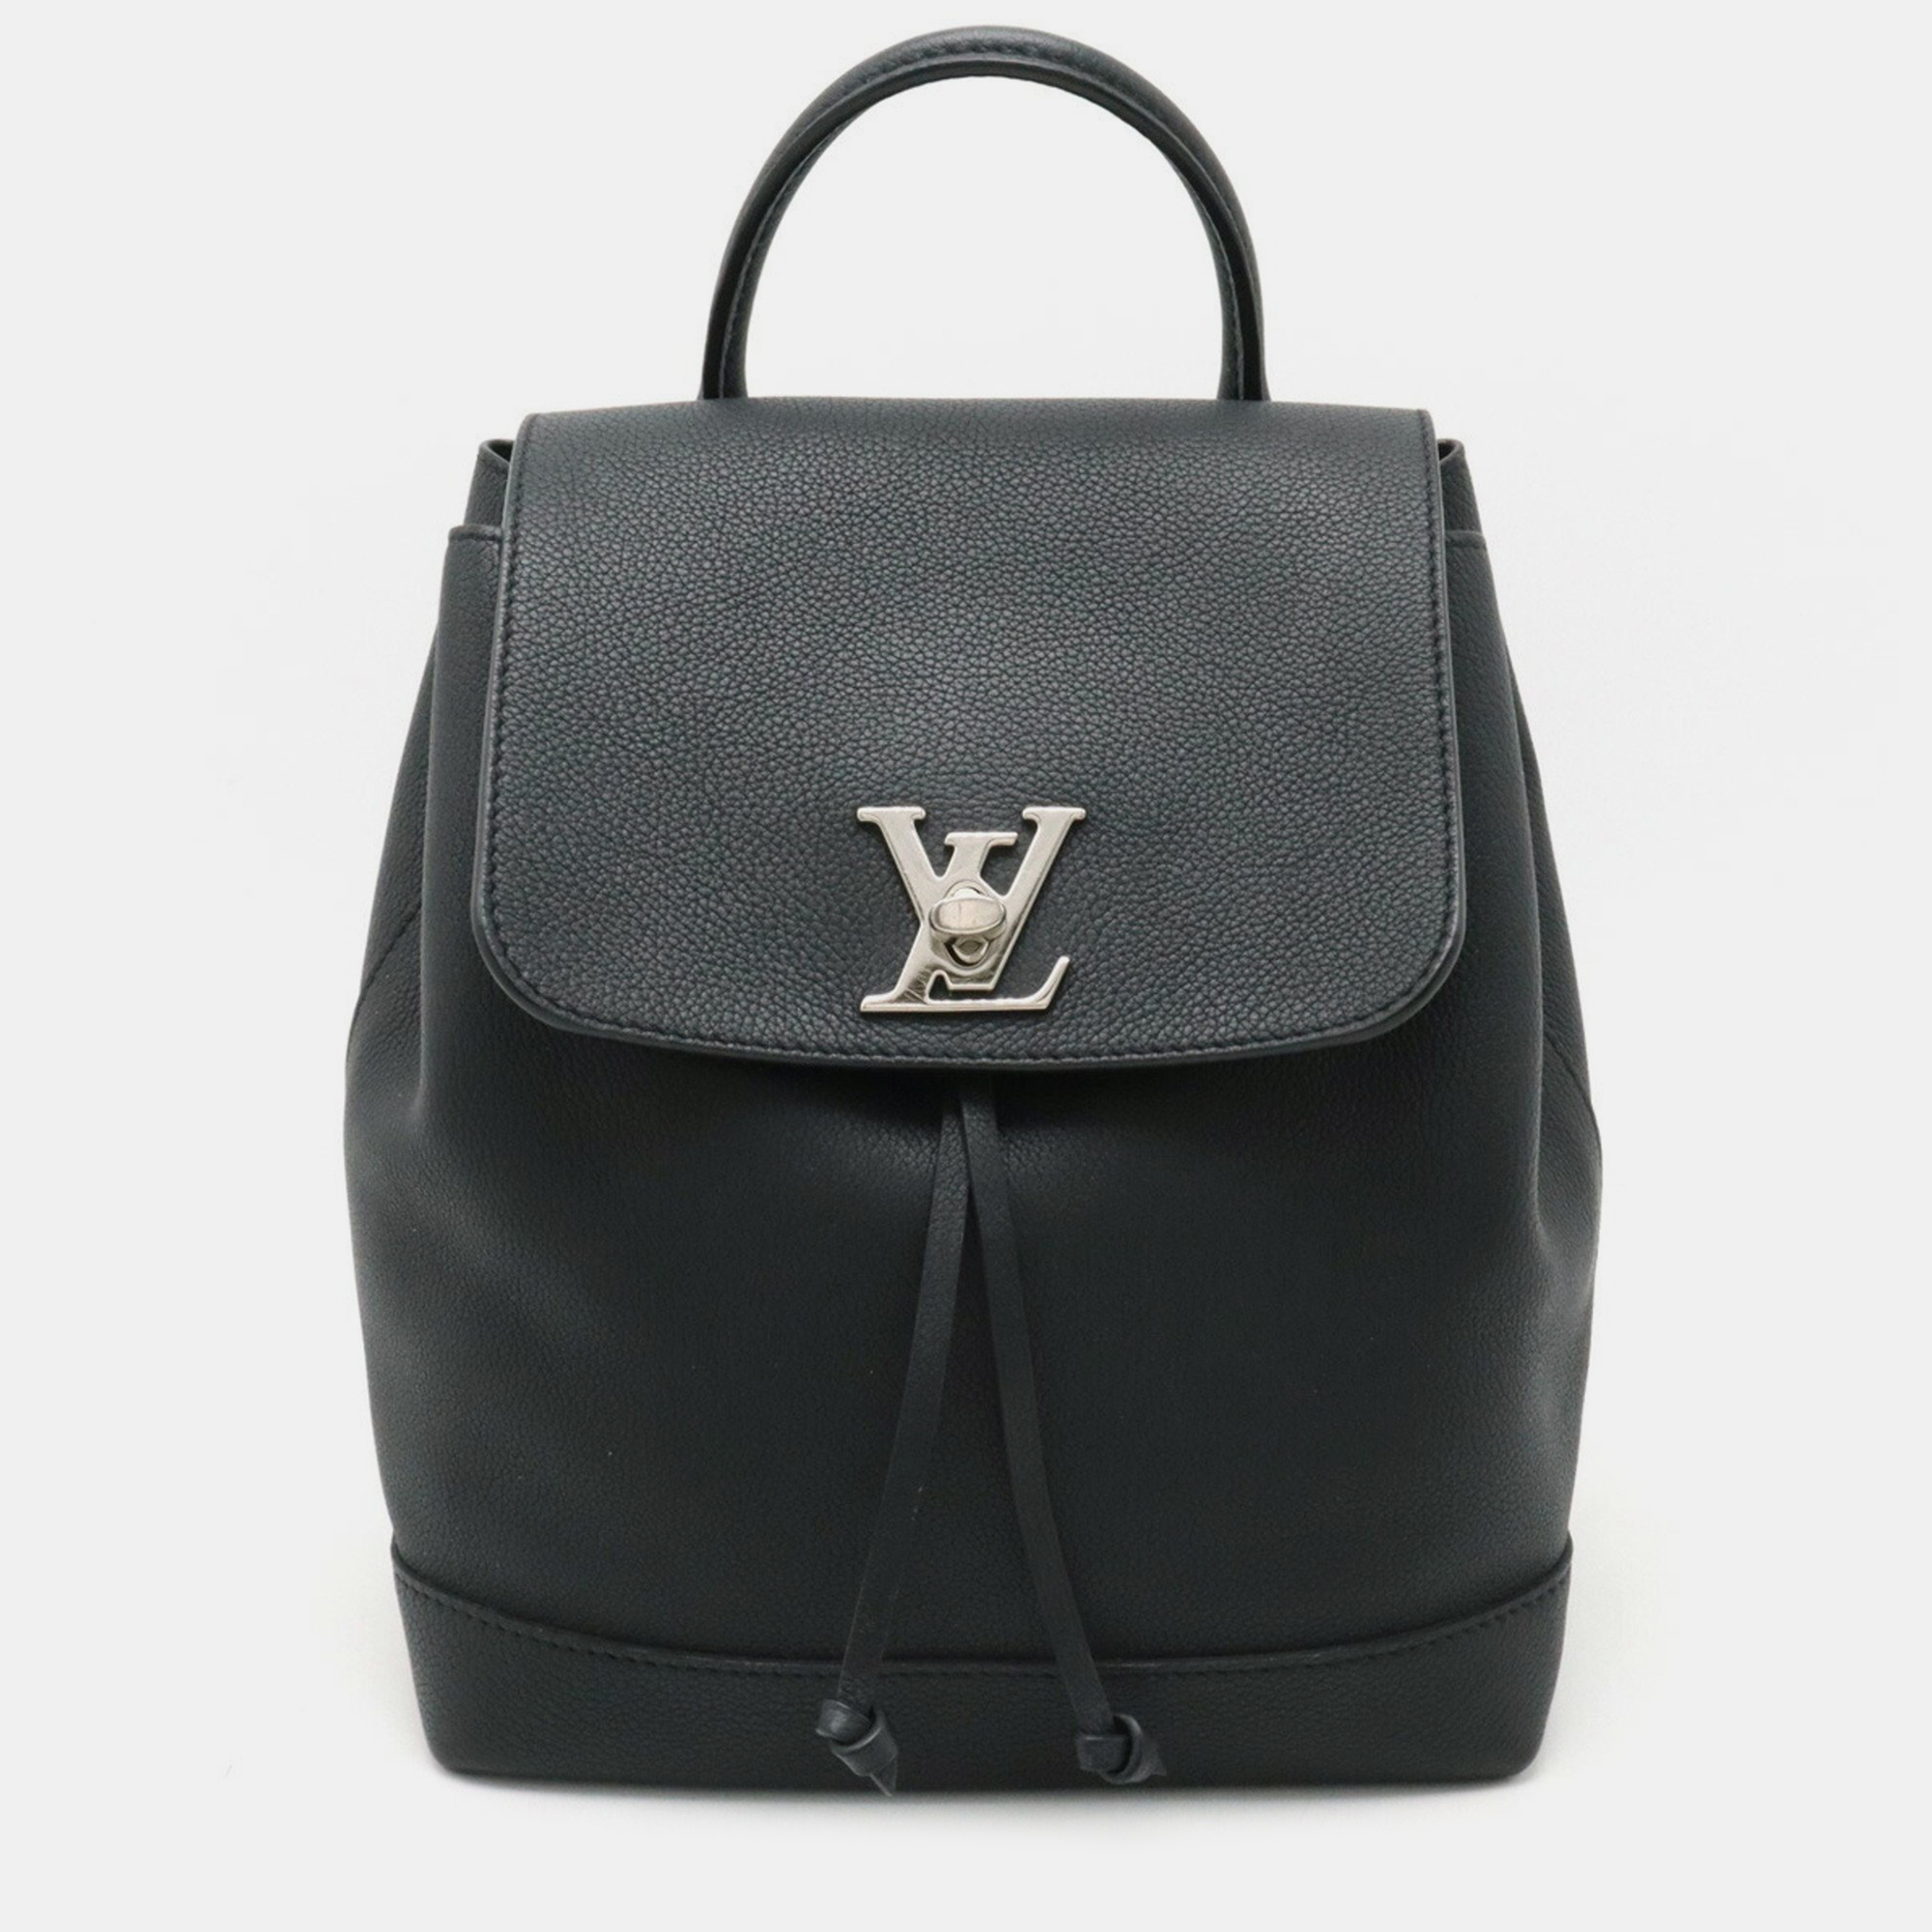 Louis vuitton black leather lockme backpack